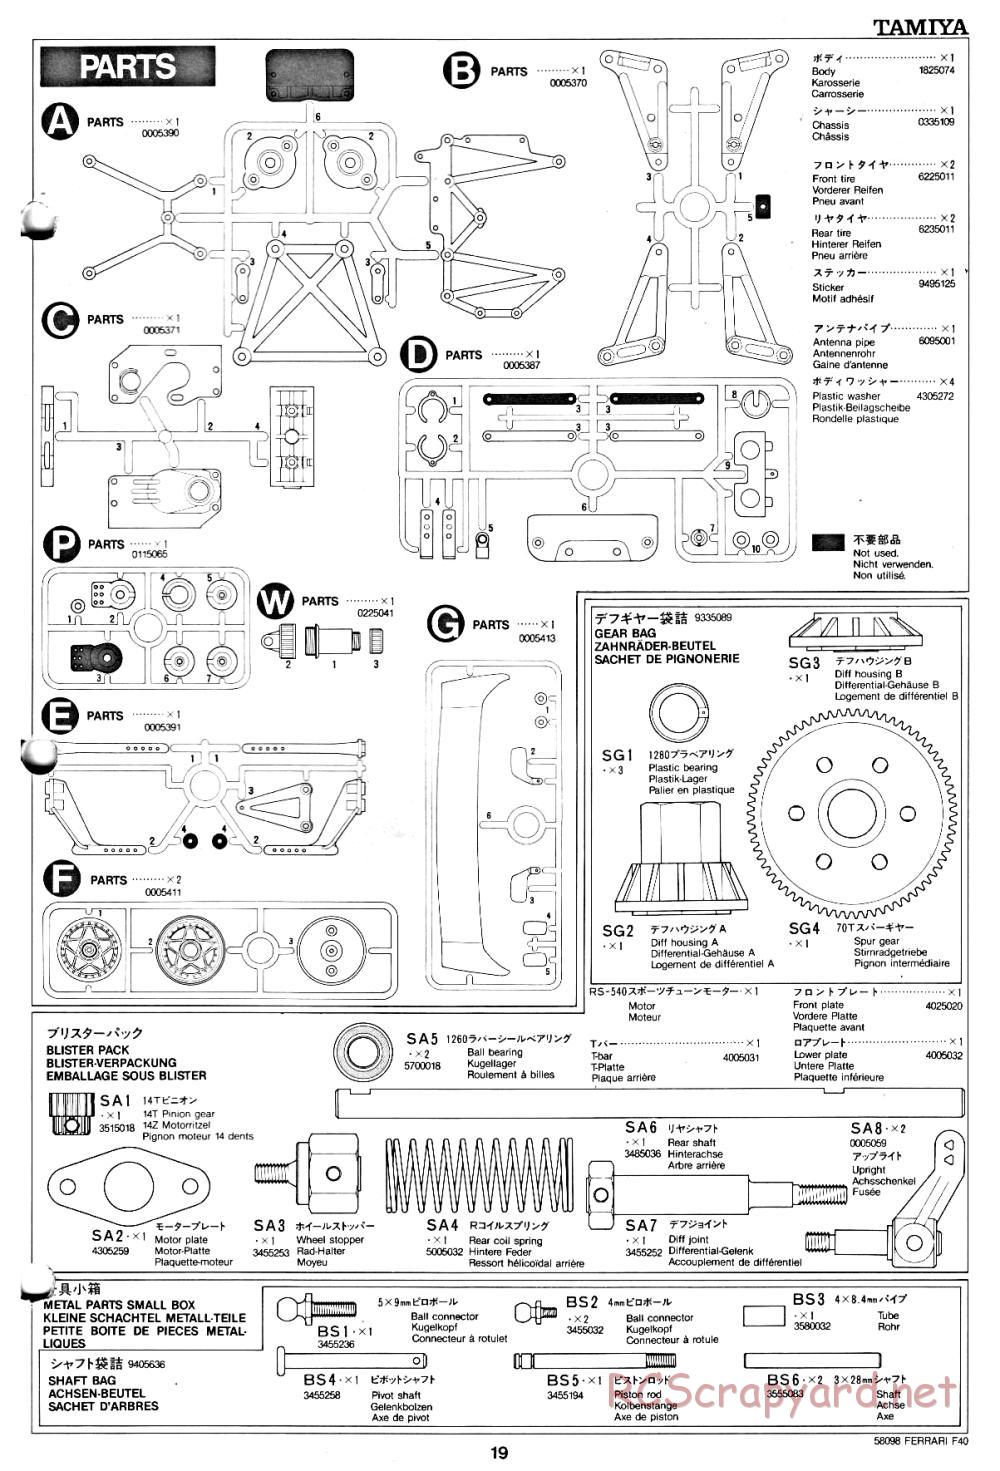 Tamiya - Ferrari F40 - 58098 - Manual - Page 19